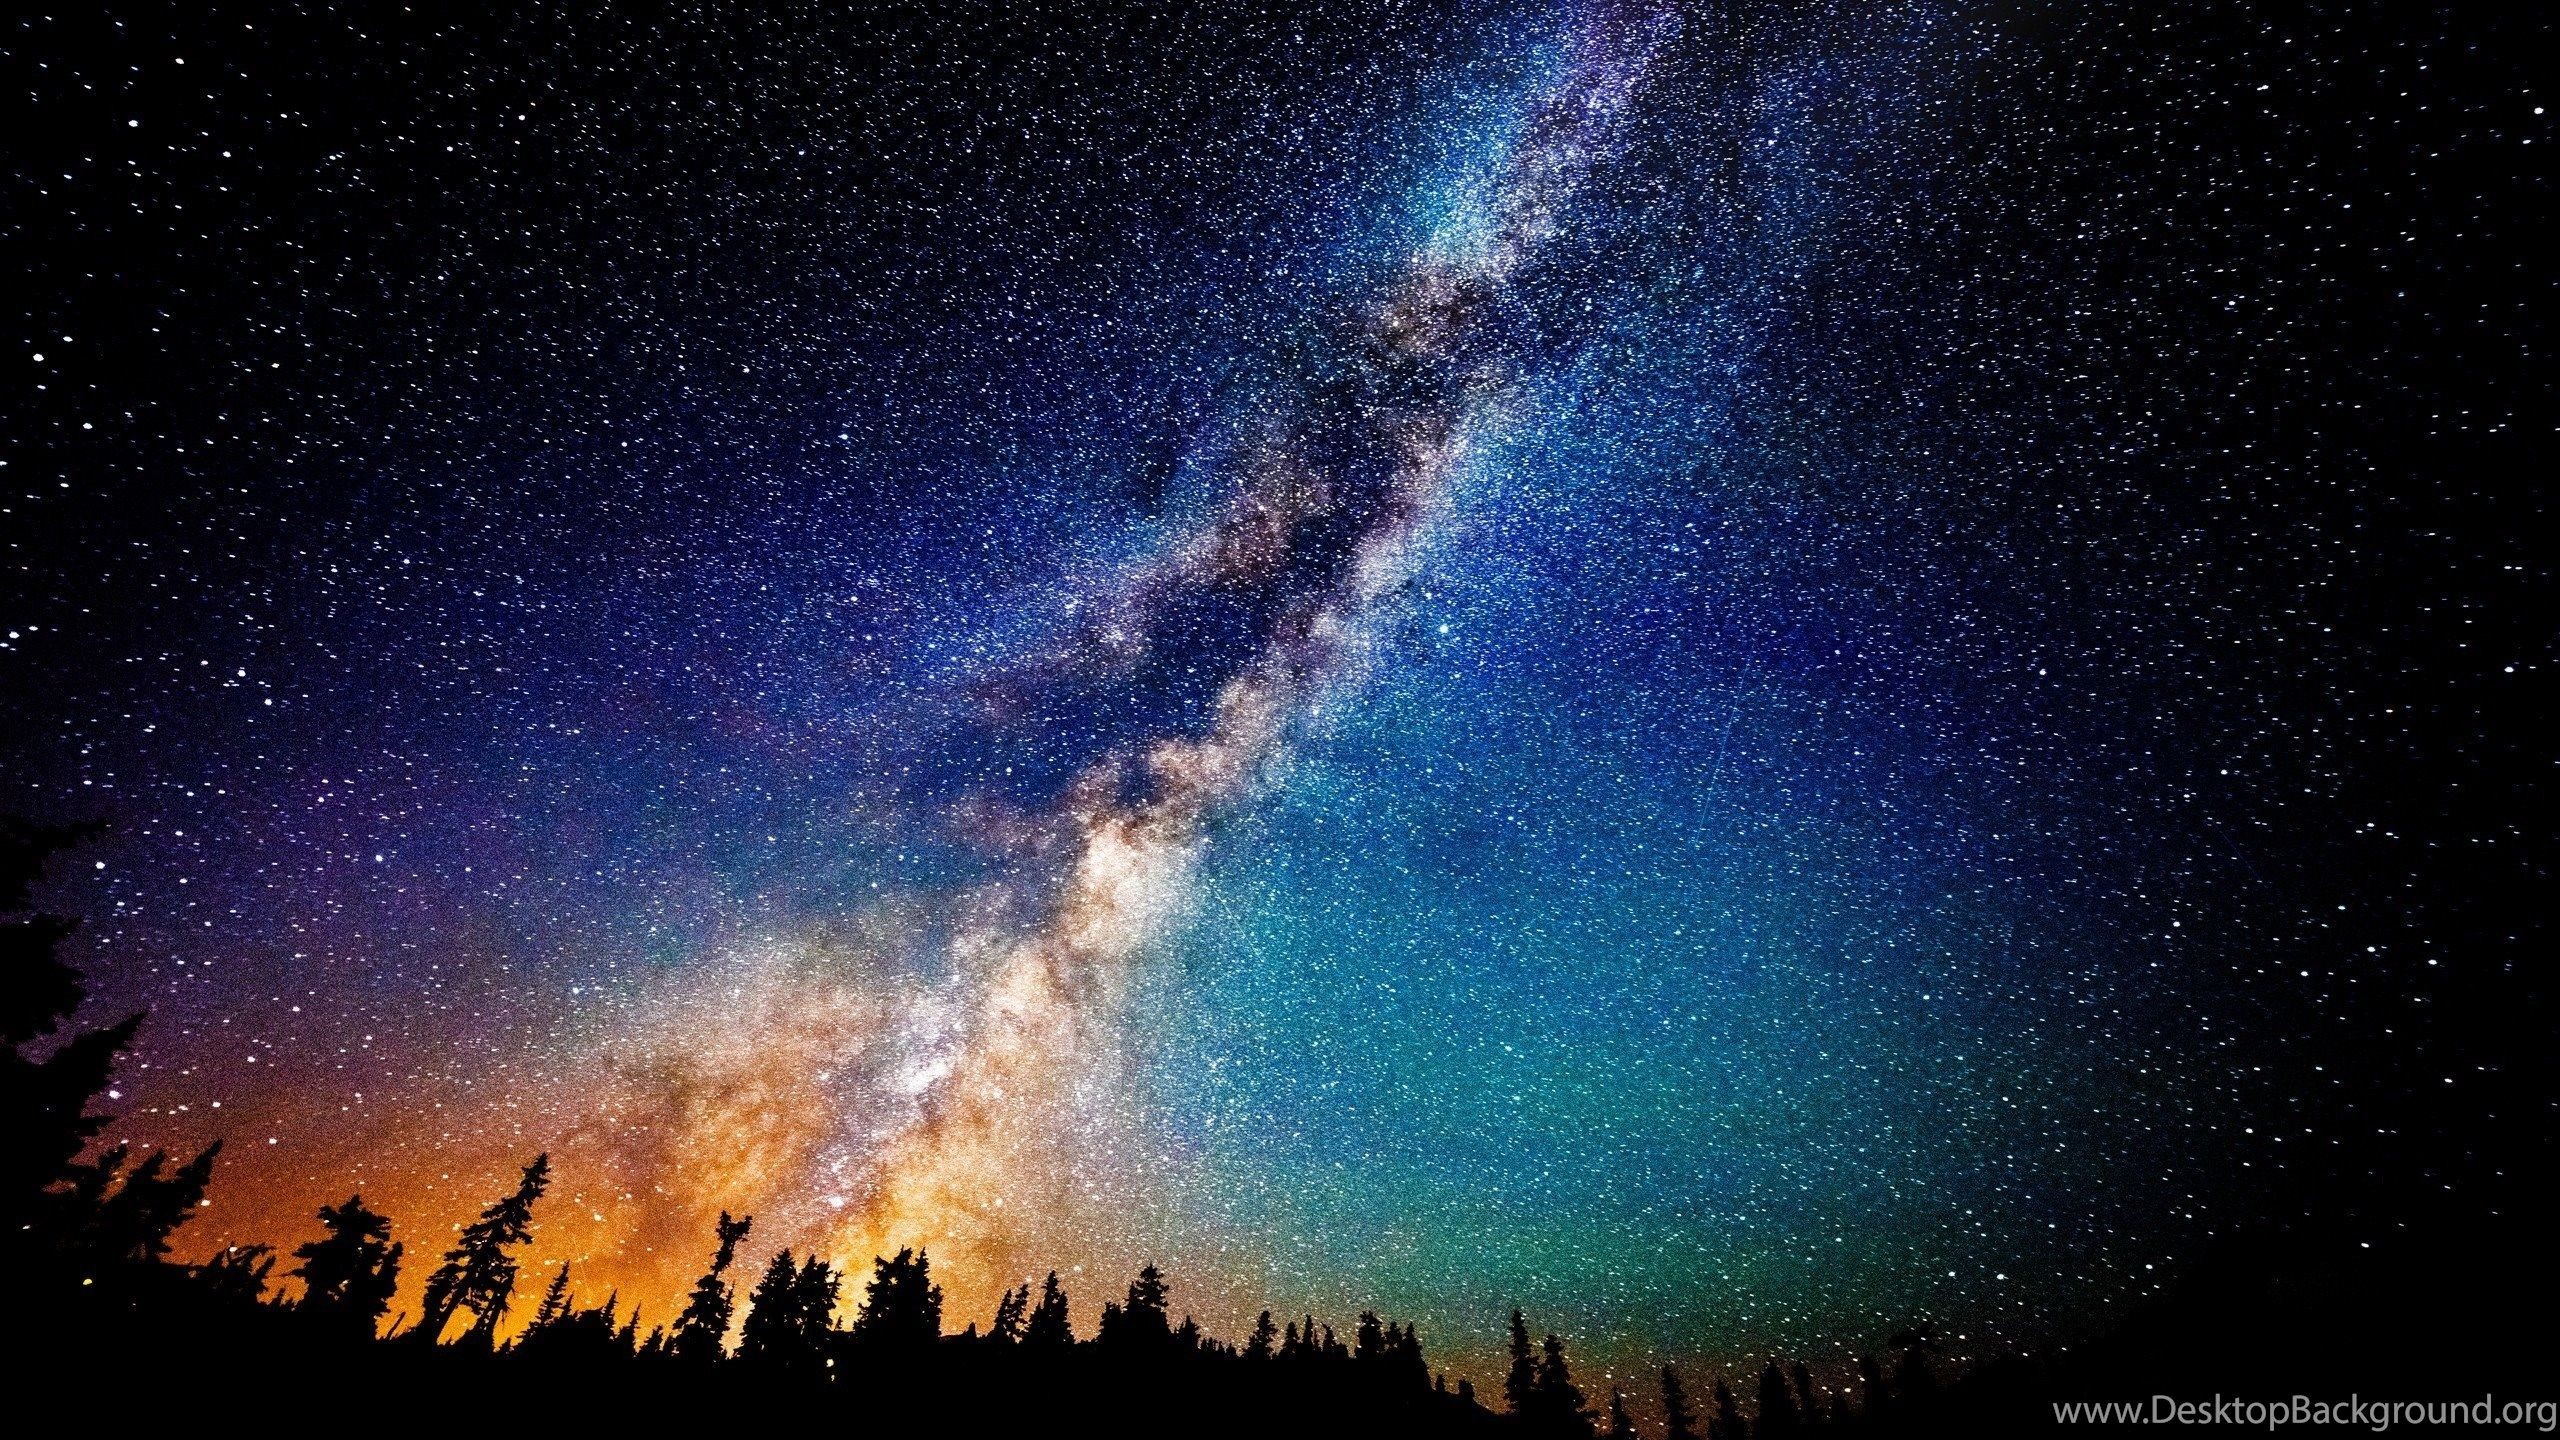 2560x1440 1920x1080 Andromeda Galaxy wallpaper - http://www.0wallpapers.com/2362 ...">